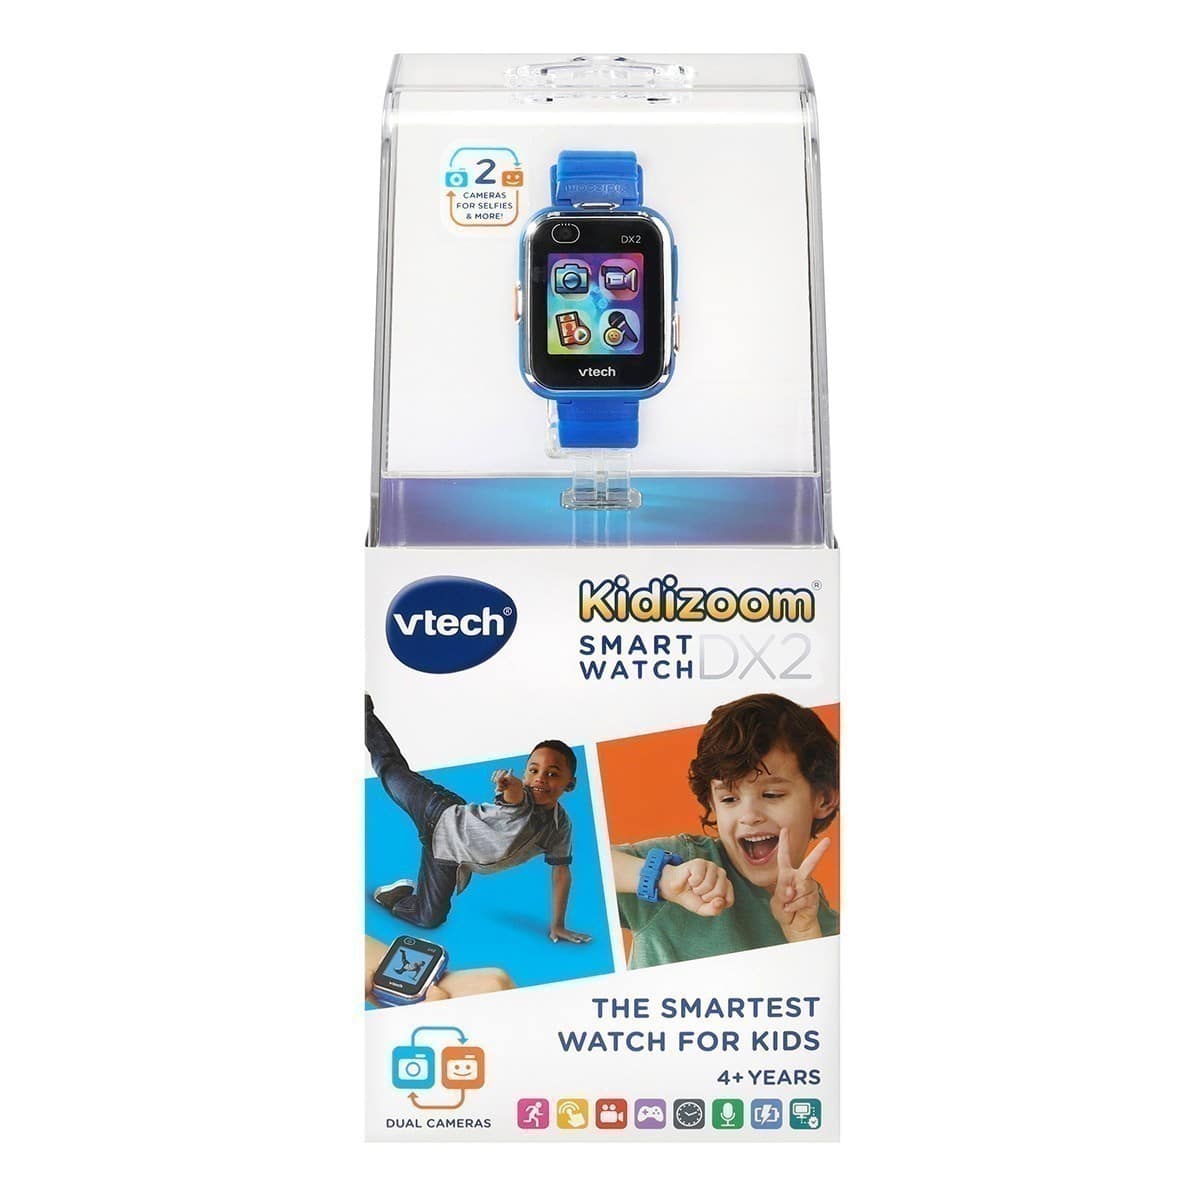 Vtech - Kidizoom Smart Watch DX 2 - Blue